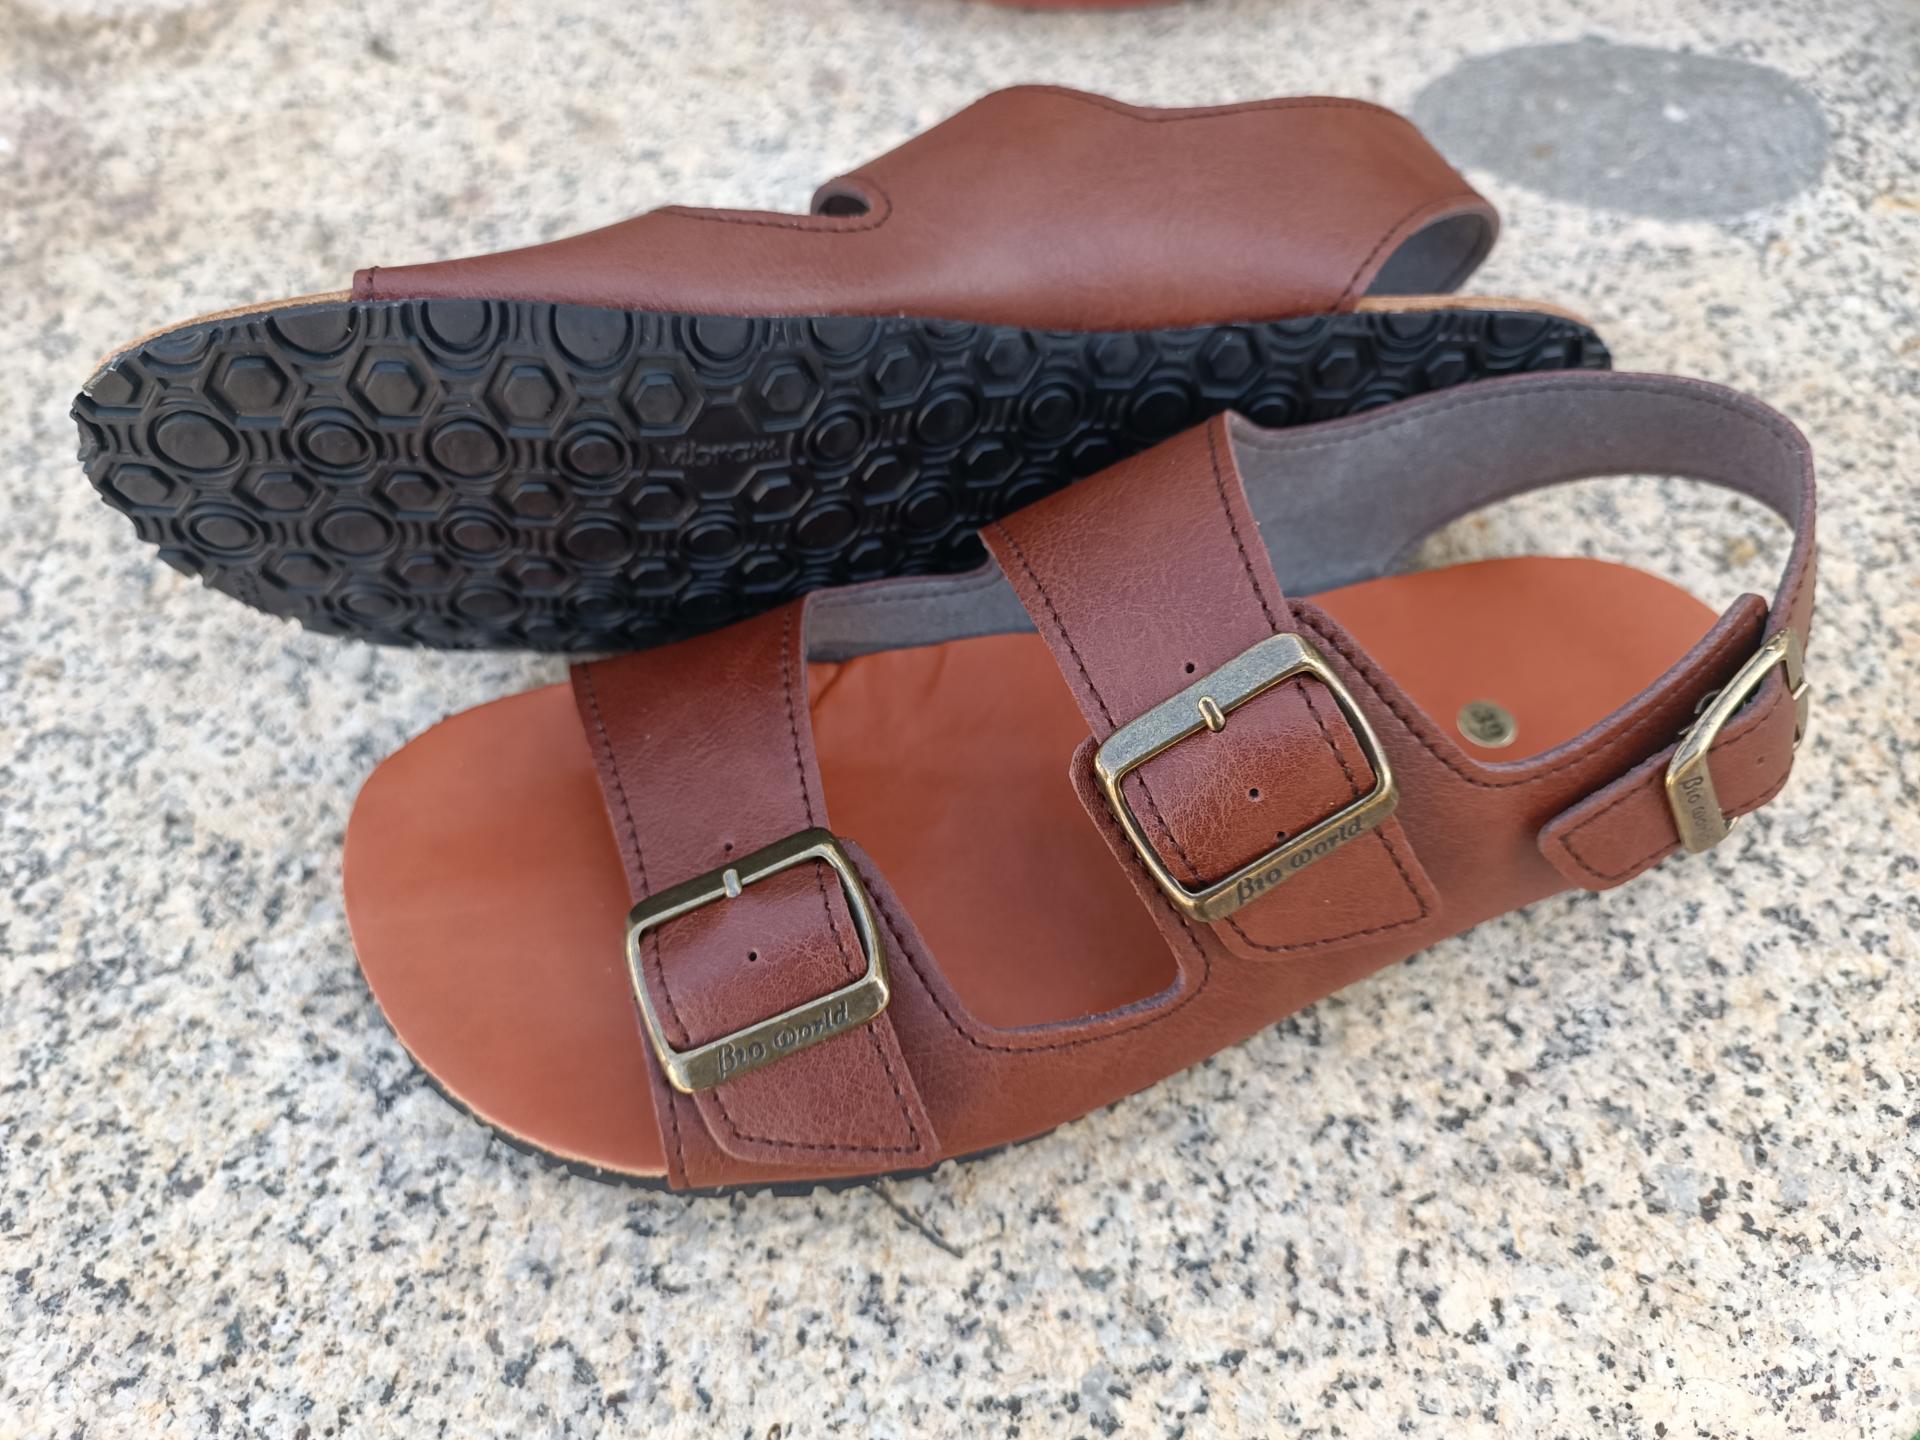 BAREFOOT CHAD marón, sandalias para mujer y hombre, calzado descalzo, sandalias veganas, eco-friendly, barefoot.